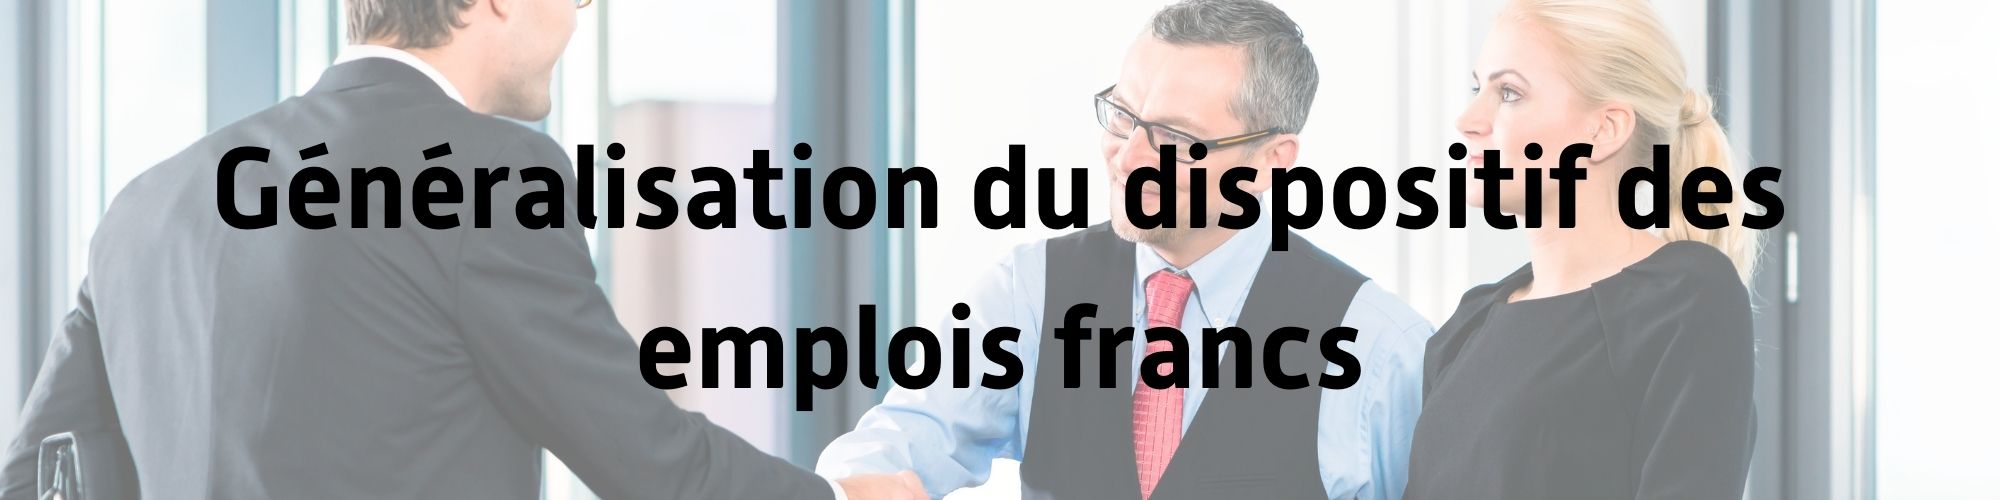 generalisation_dispositif_emploi_franc